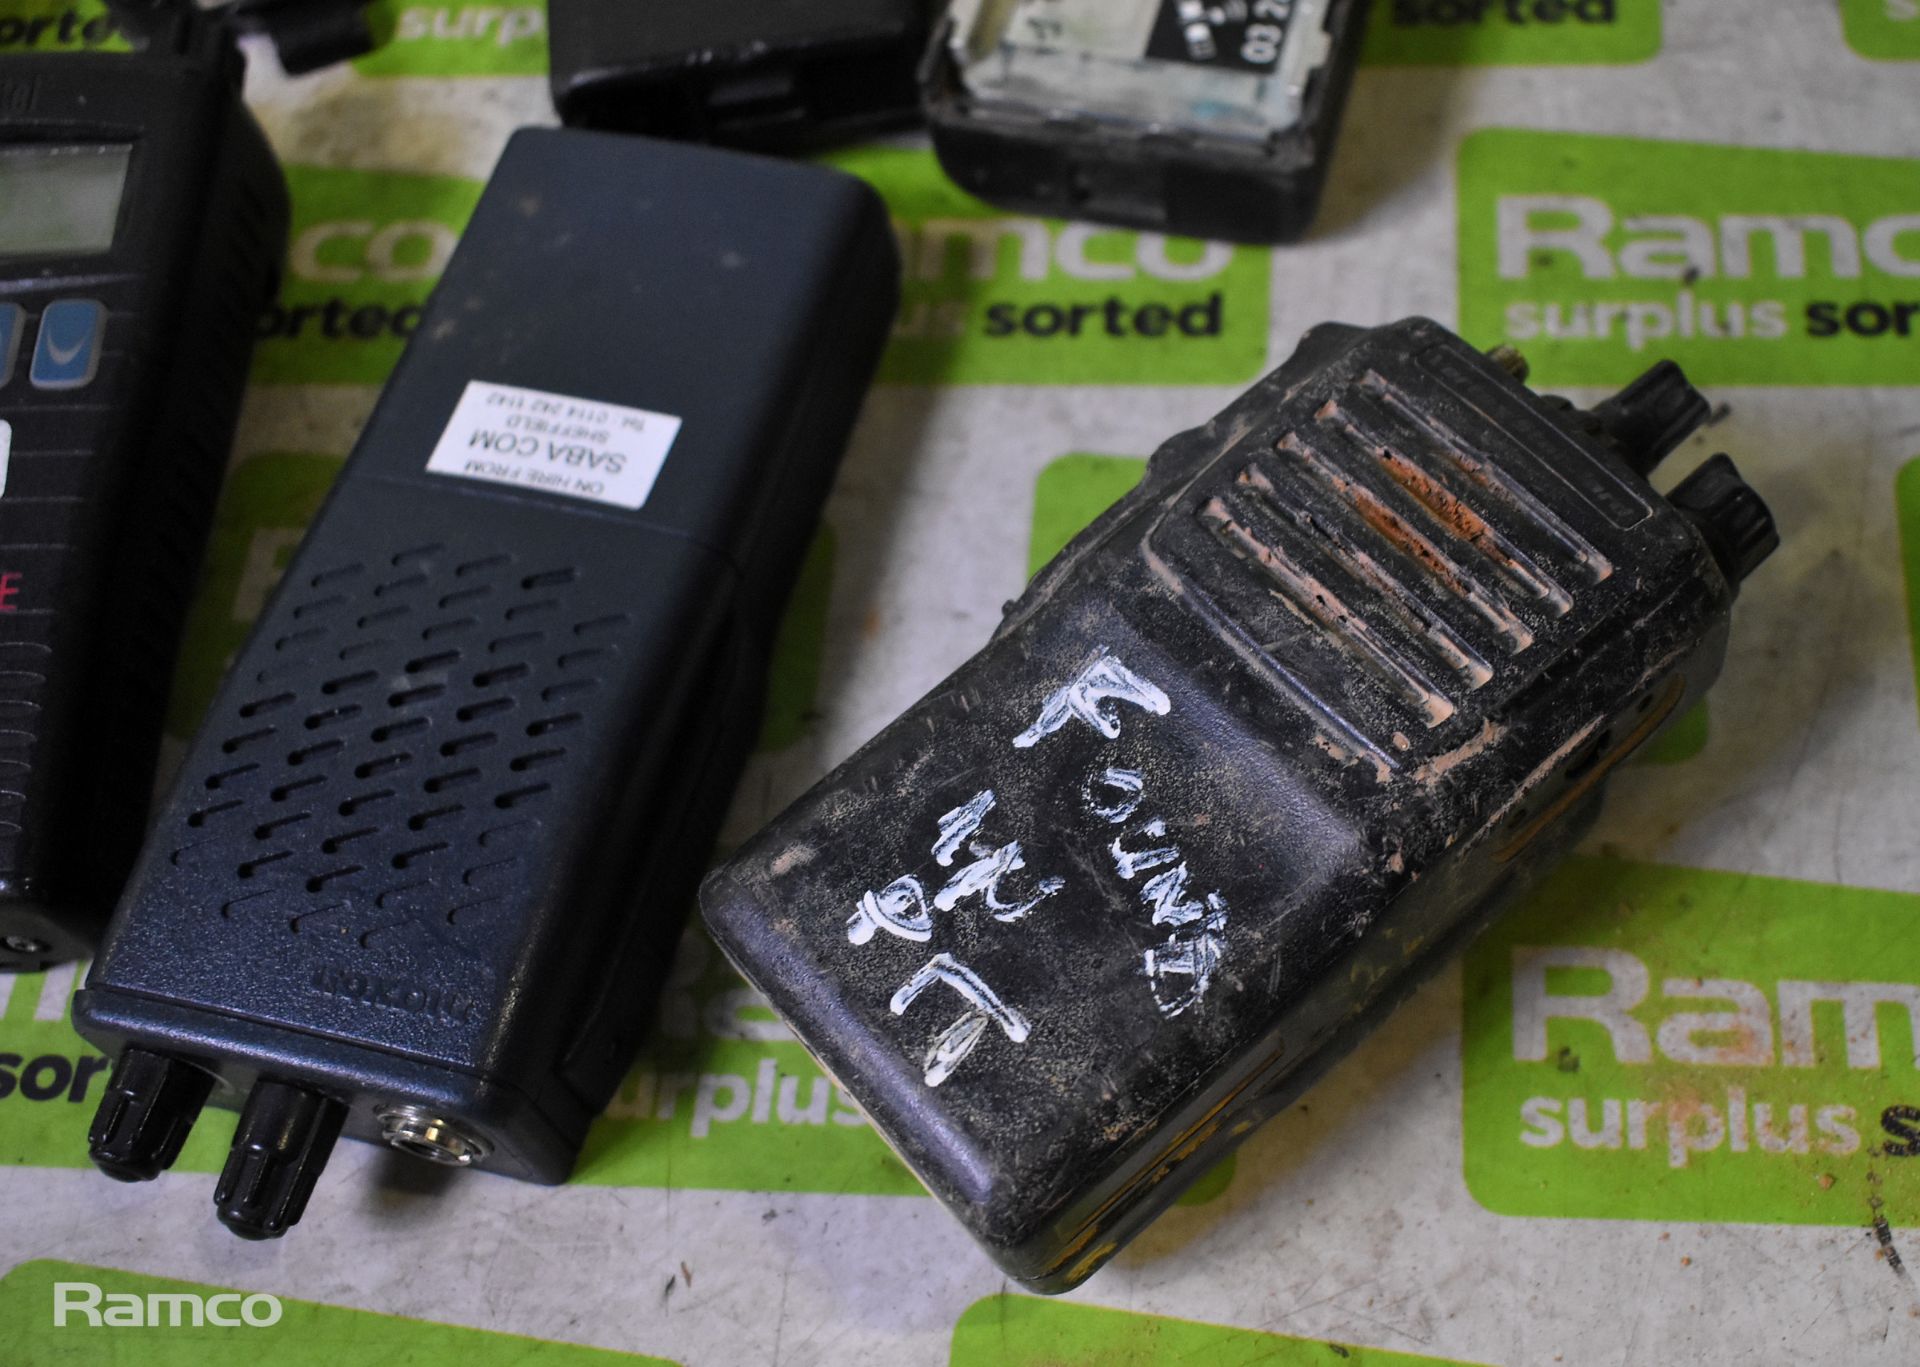 Approx 57x assorted two way radios - 19x Motorola GP900, 19x GP300, 10x Vertex, 1x Icom, 1x Maxon - Image 6 of 6